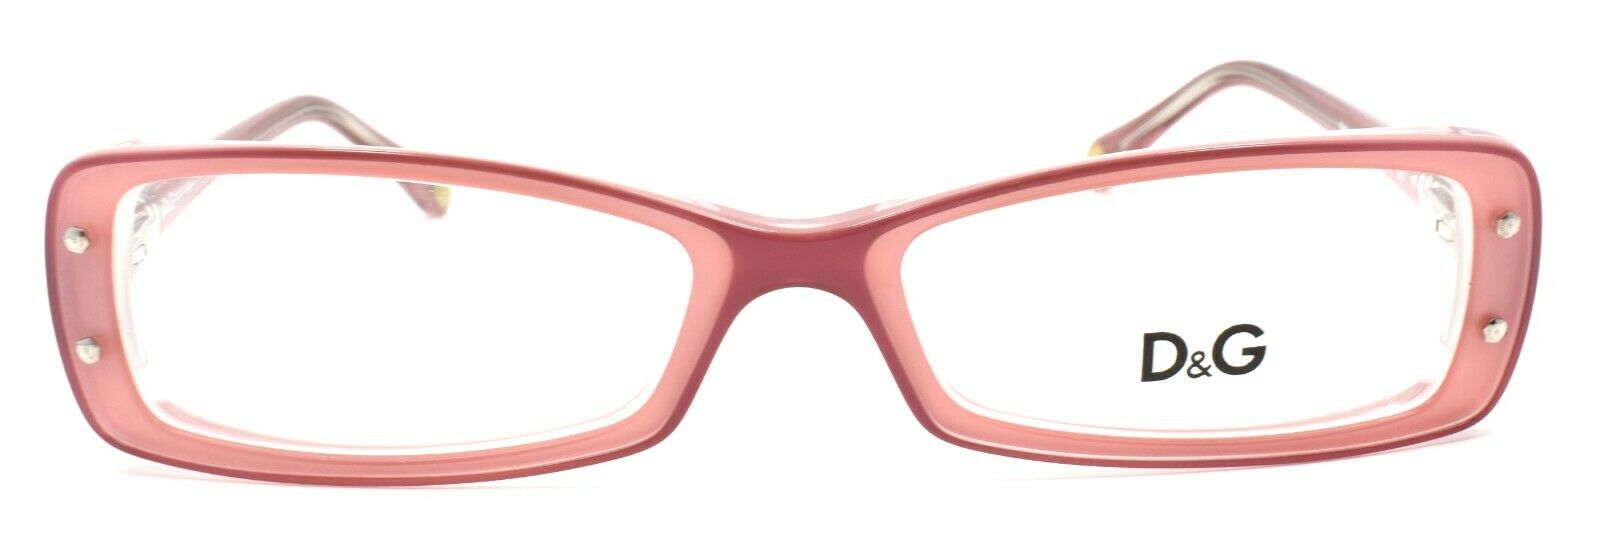 2-Dolce & Gabbana D&G 1227 1980 Women's Eyeglasses Frames 51-16-135 Marc On Pink-679420461083-IKSpecs